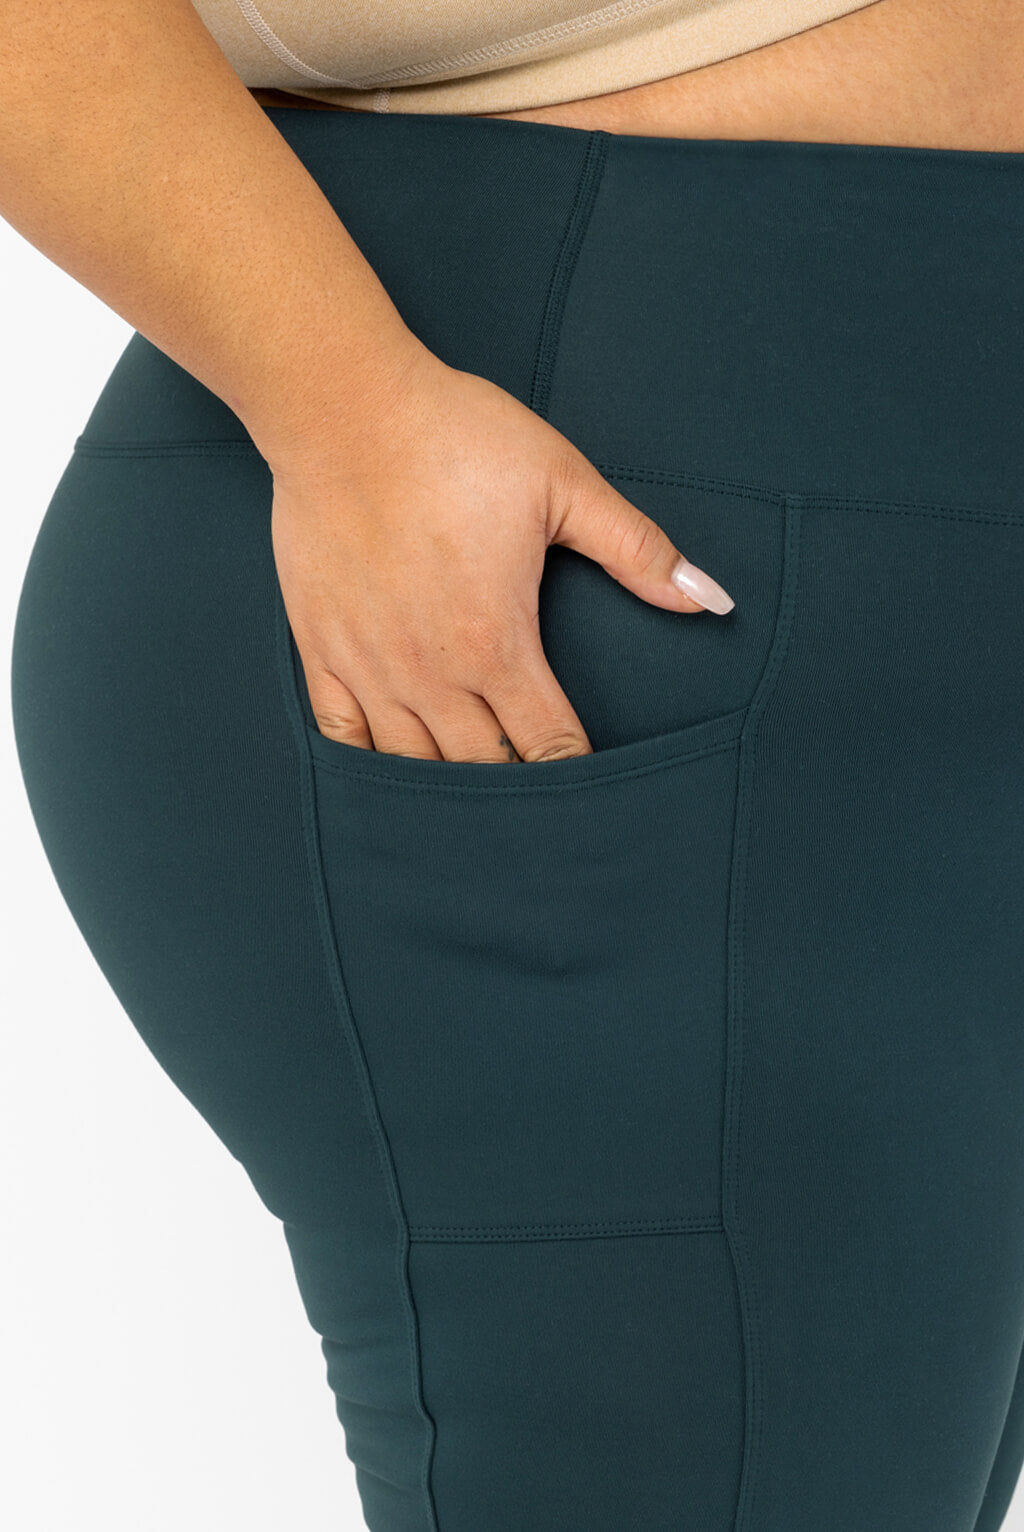 48 Wholesale Women Fashion Leggings With Back Pocket Design - at